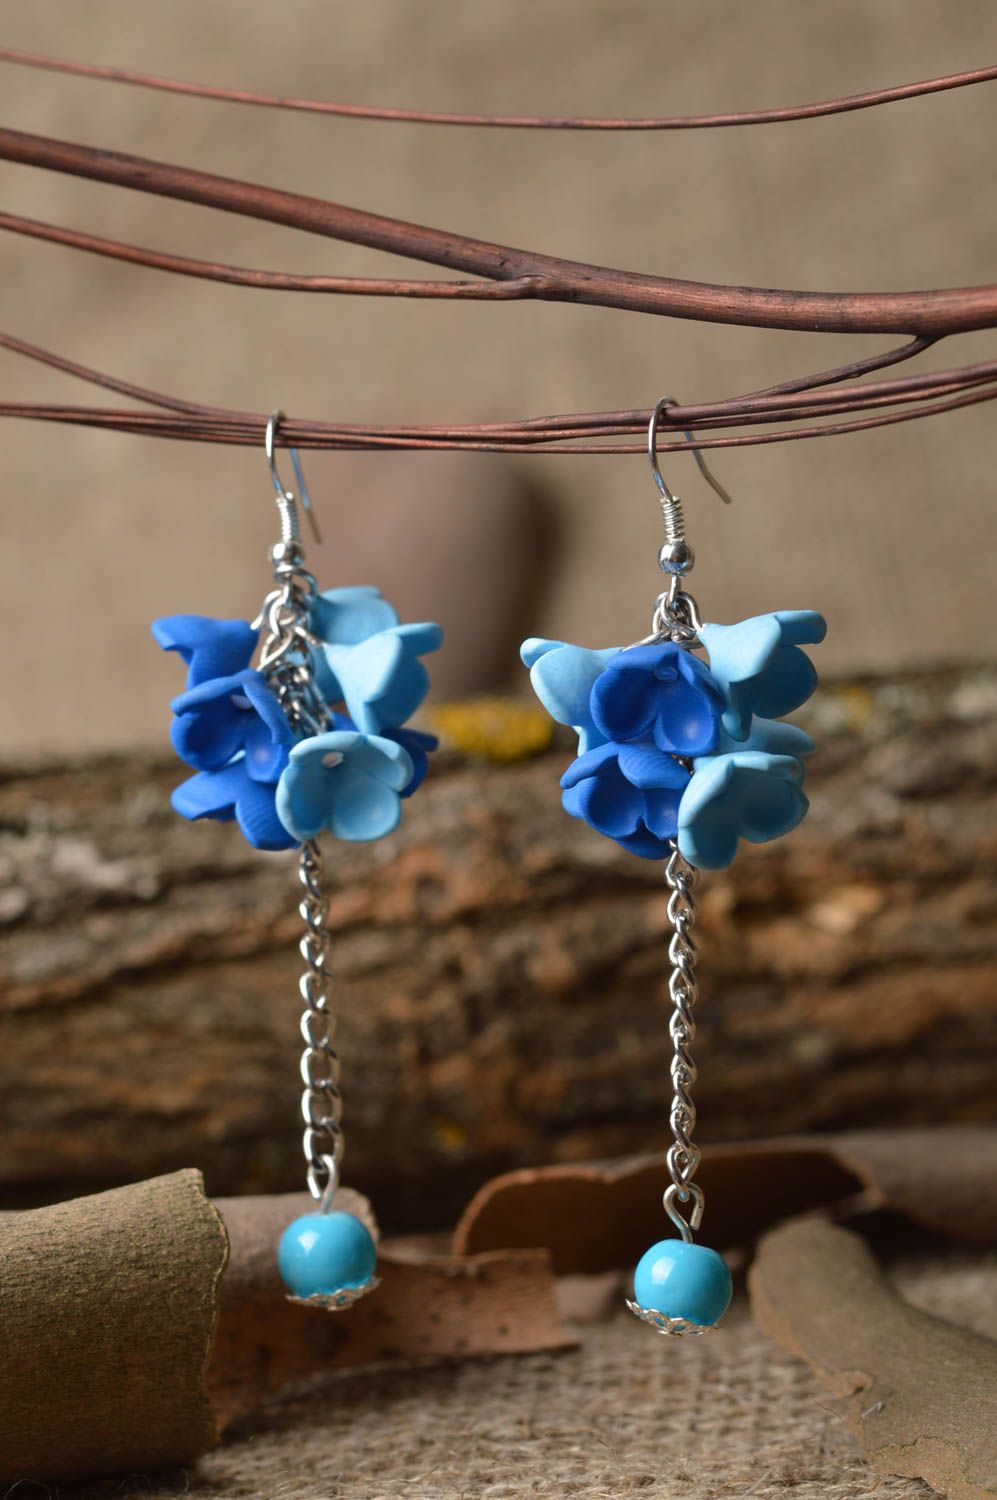 Stylish handmade plastic earrings flower earrings cool jewelry designs photo 1